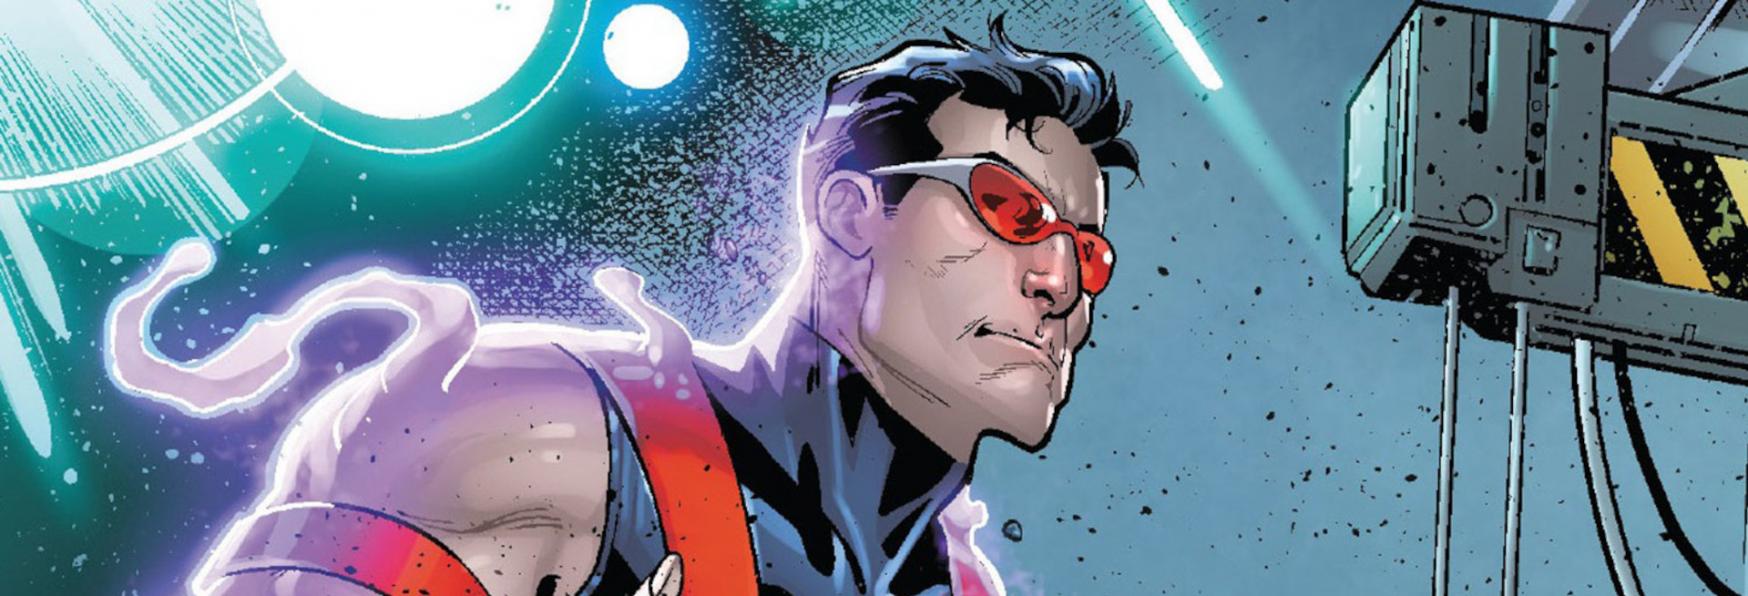 Wonder Man: la nuova Serie TV dei Marvel Studios sarà una Satira di Hollywood?